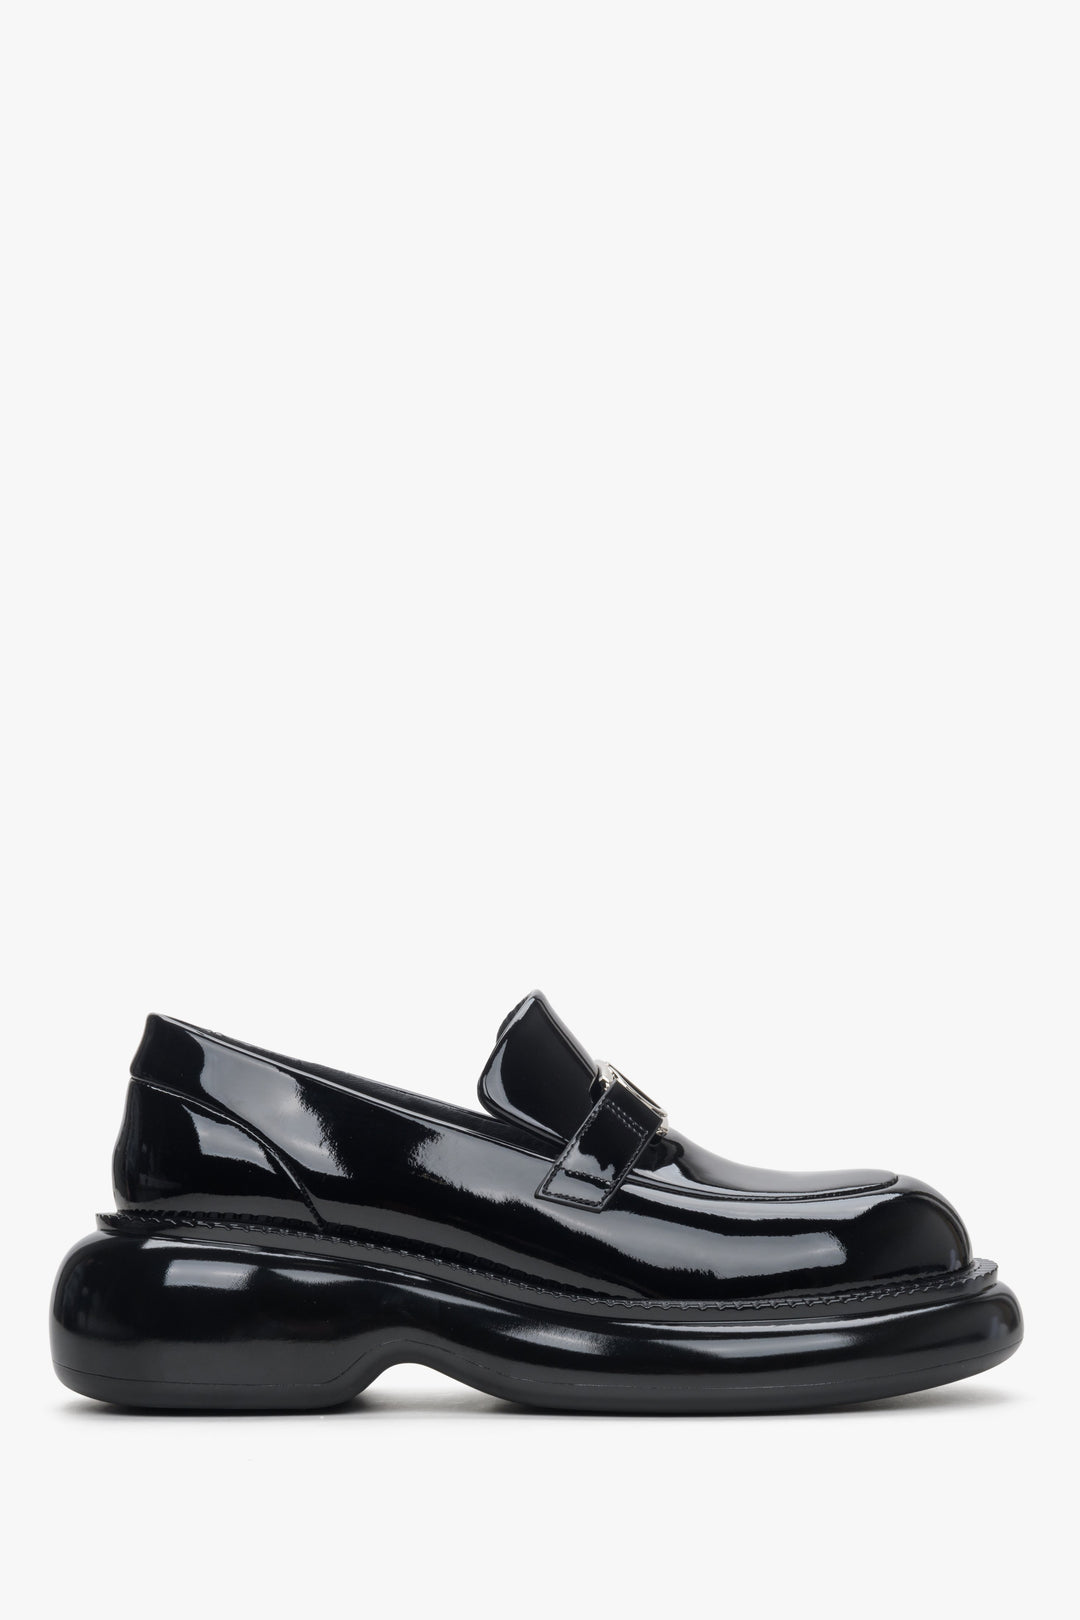 Women's black patent leather loafers Estro - shoe profile.